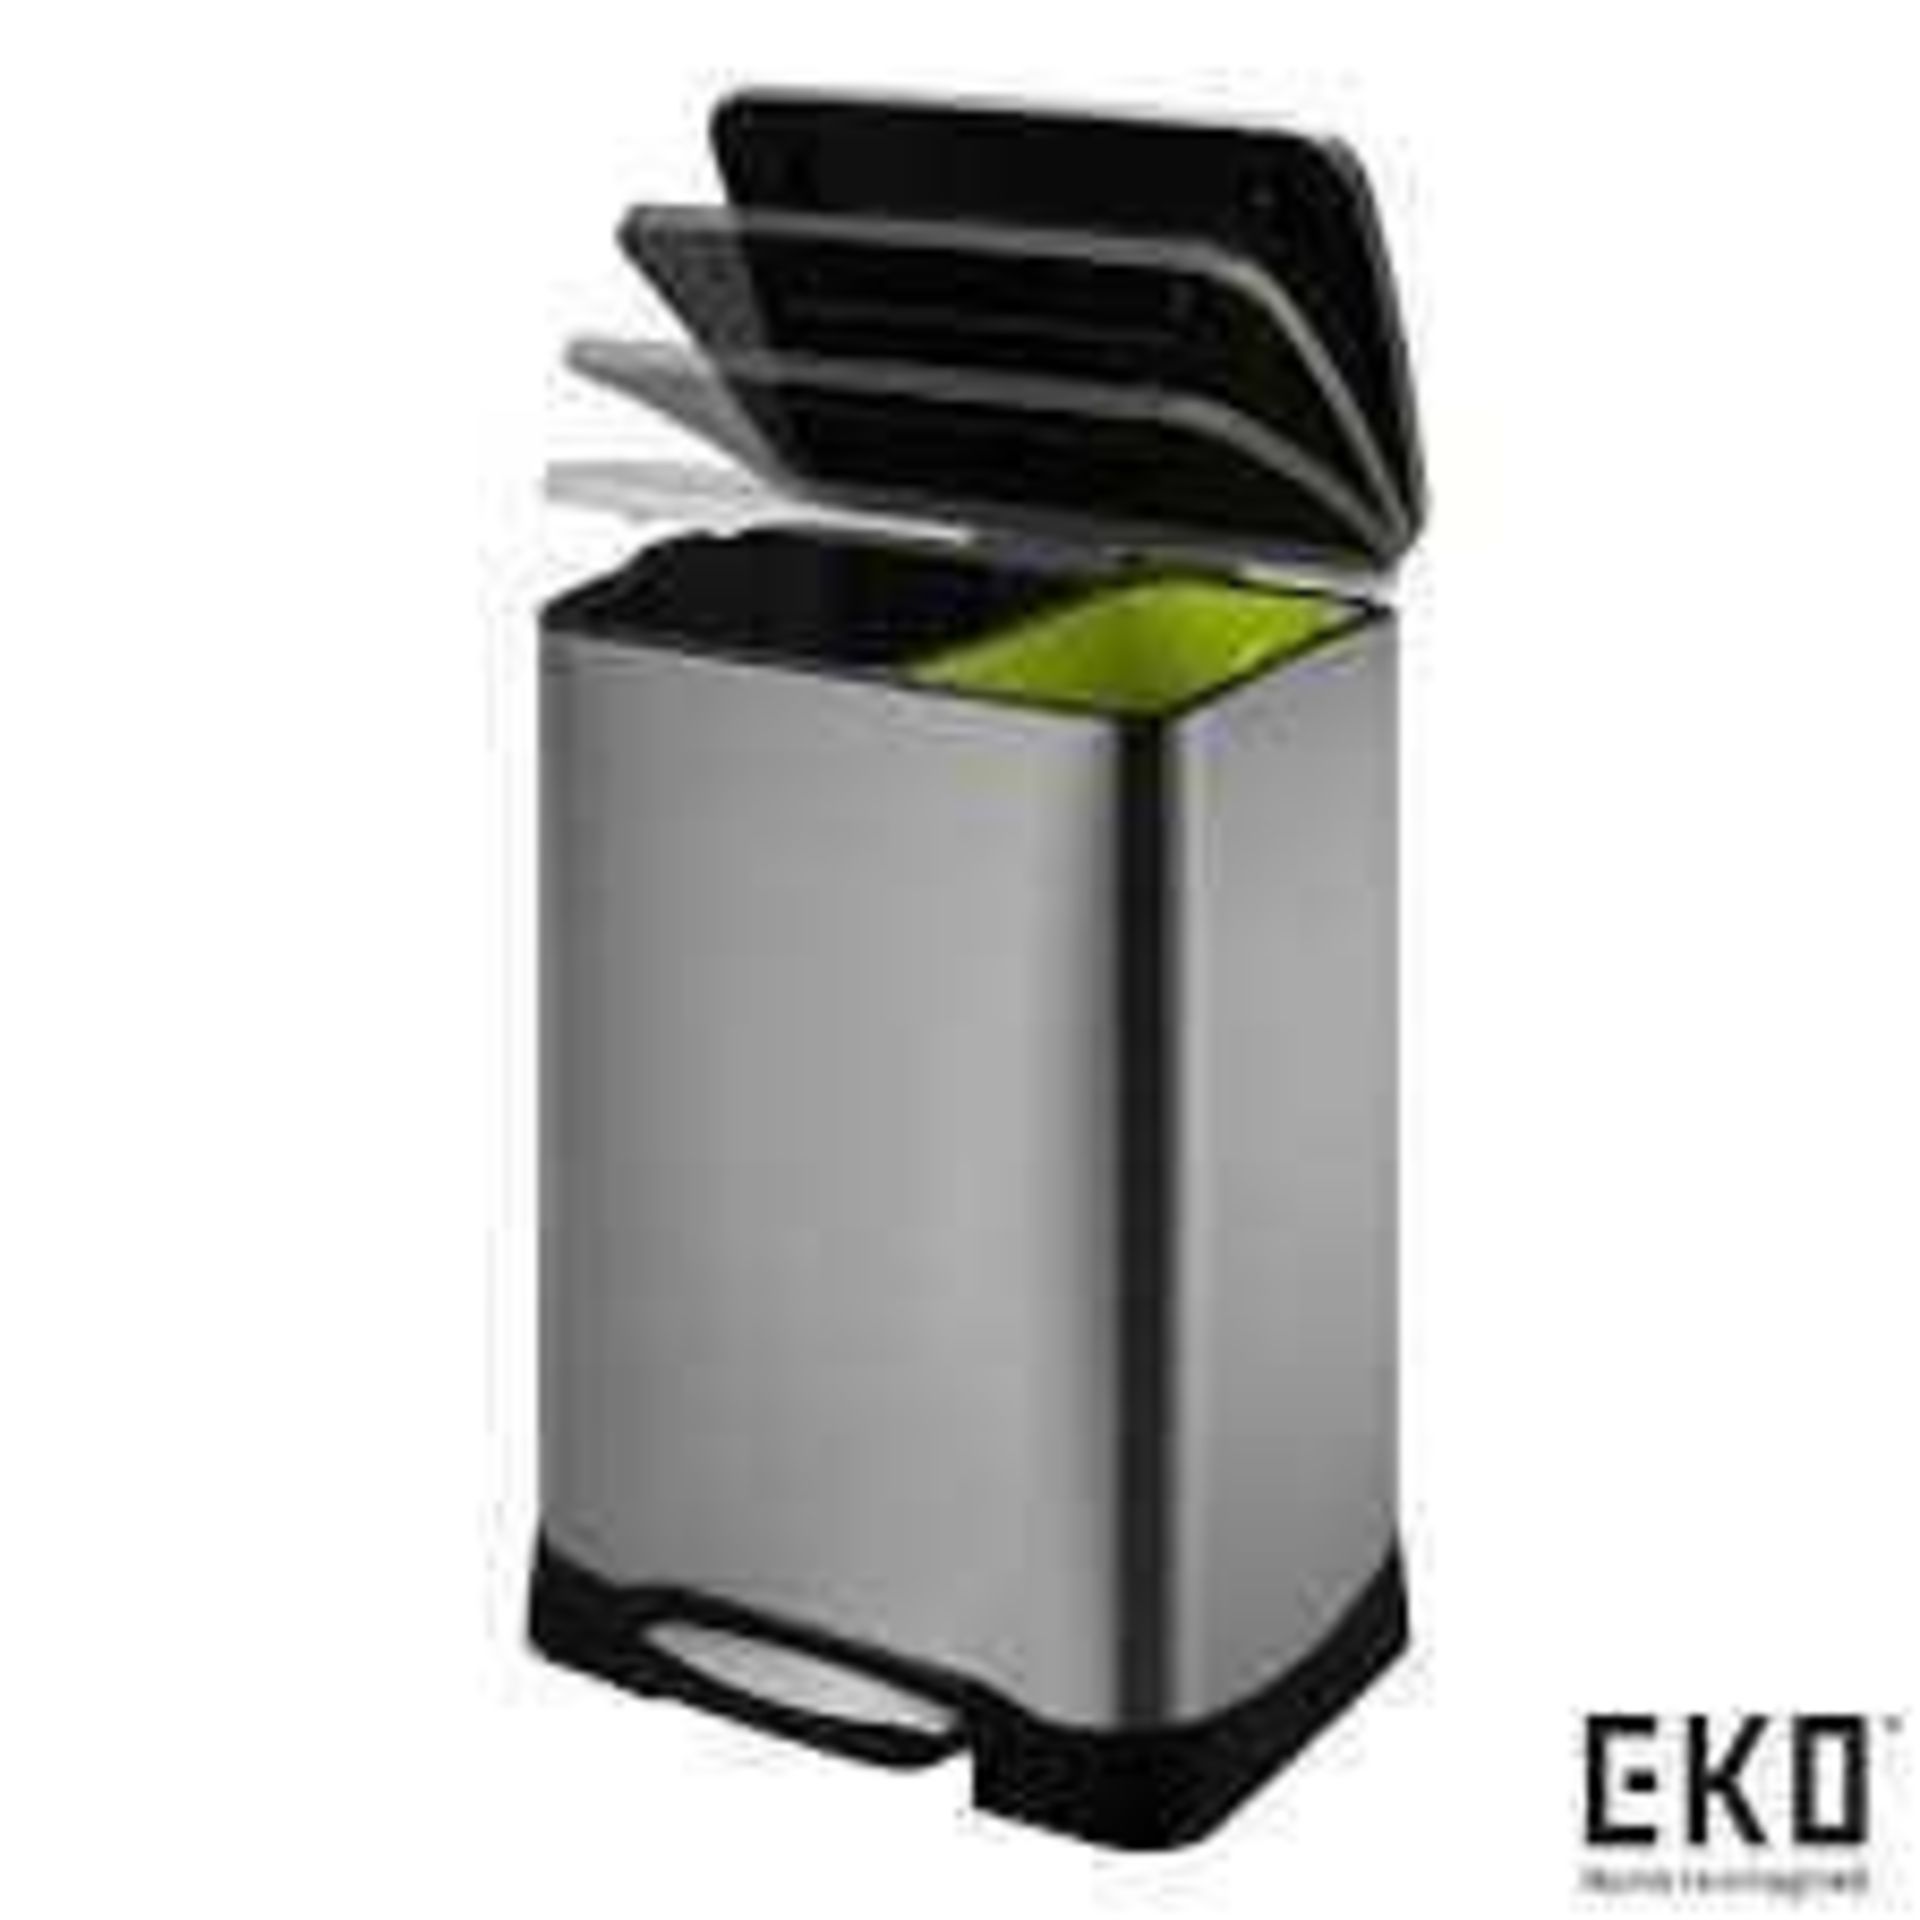 RRP £200 Lot Contains X2 Boxed Eko Recycling Bin